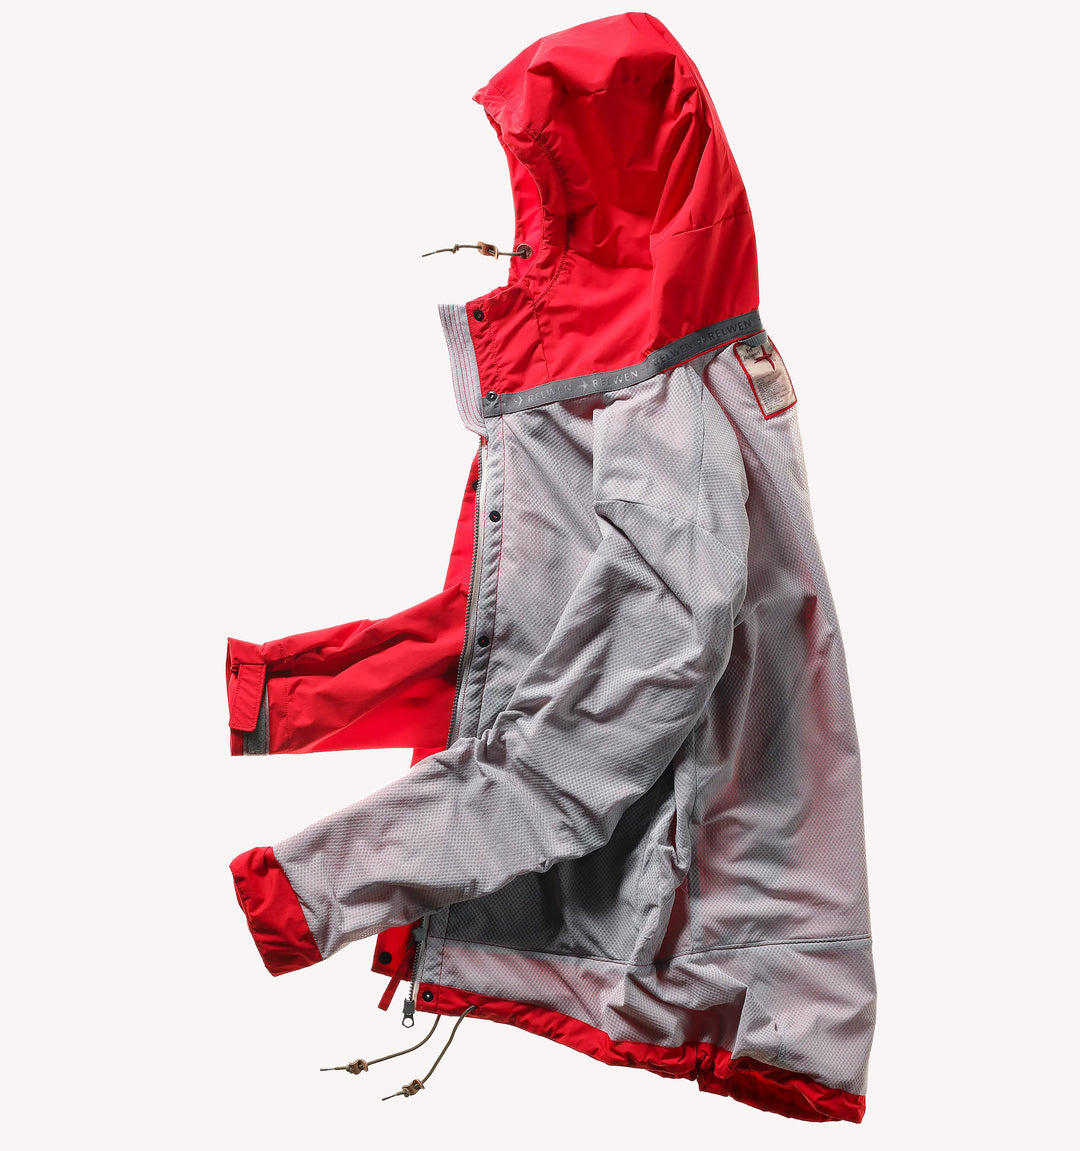 Relwen Ultralight Shell Jacket in Bright Red